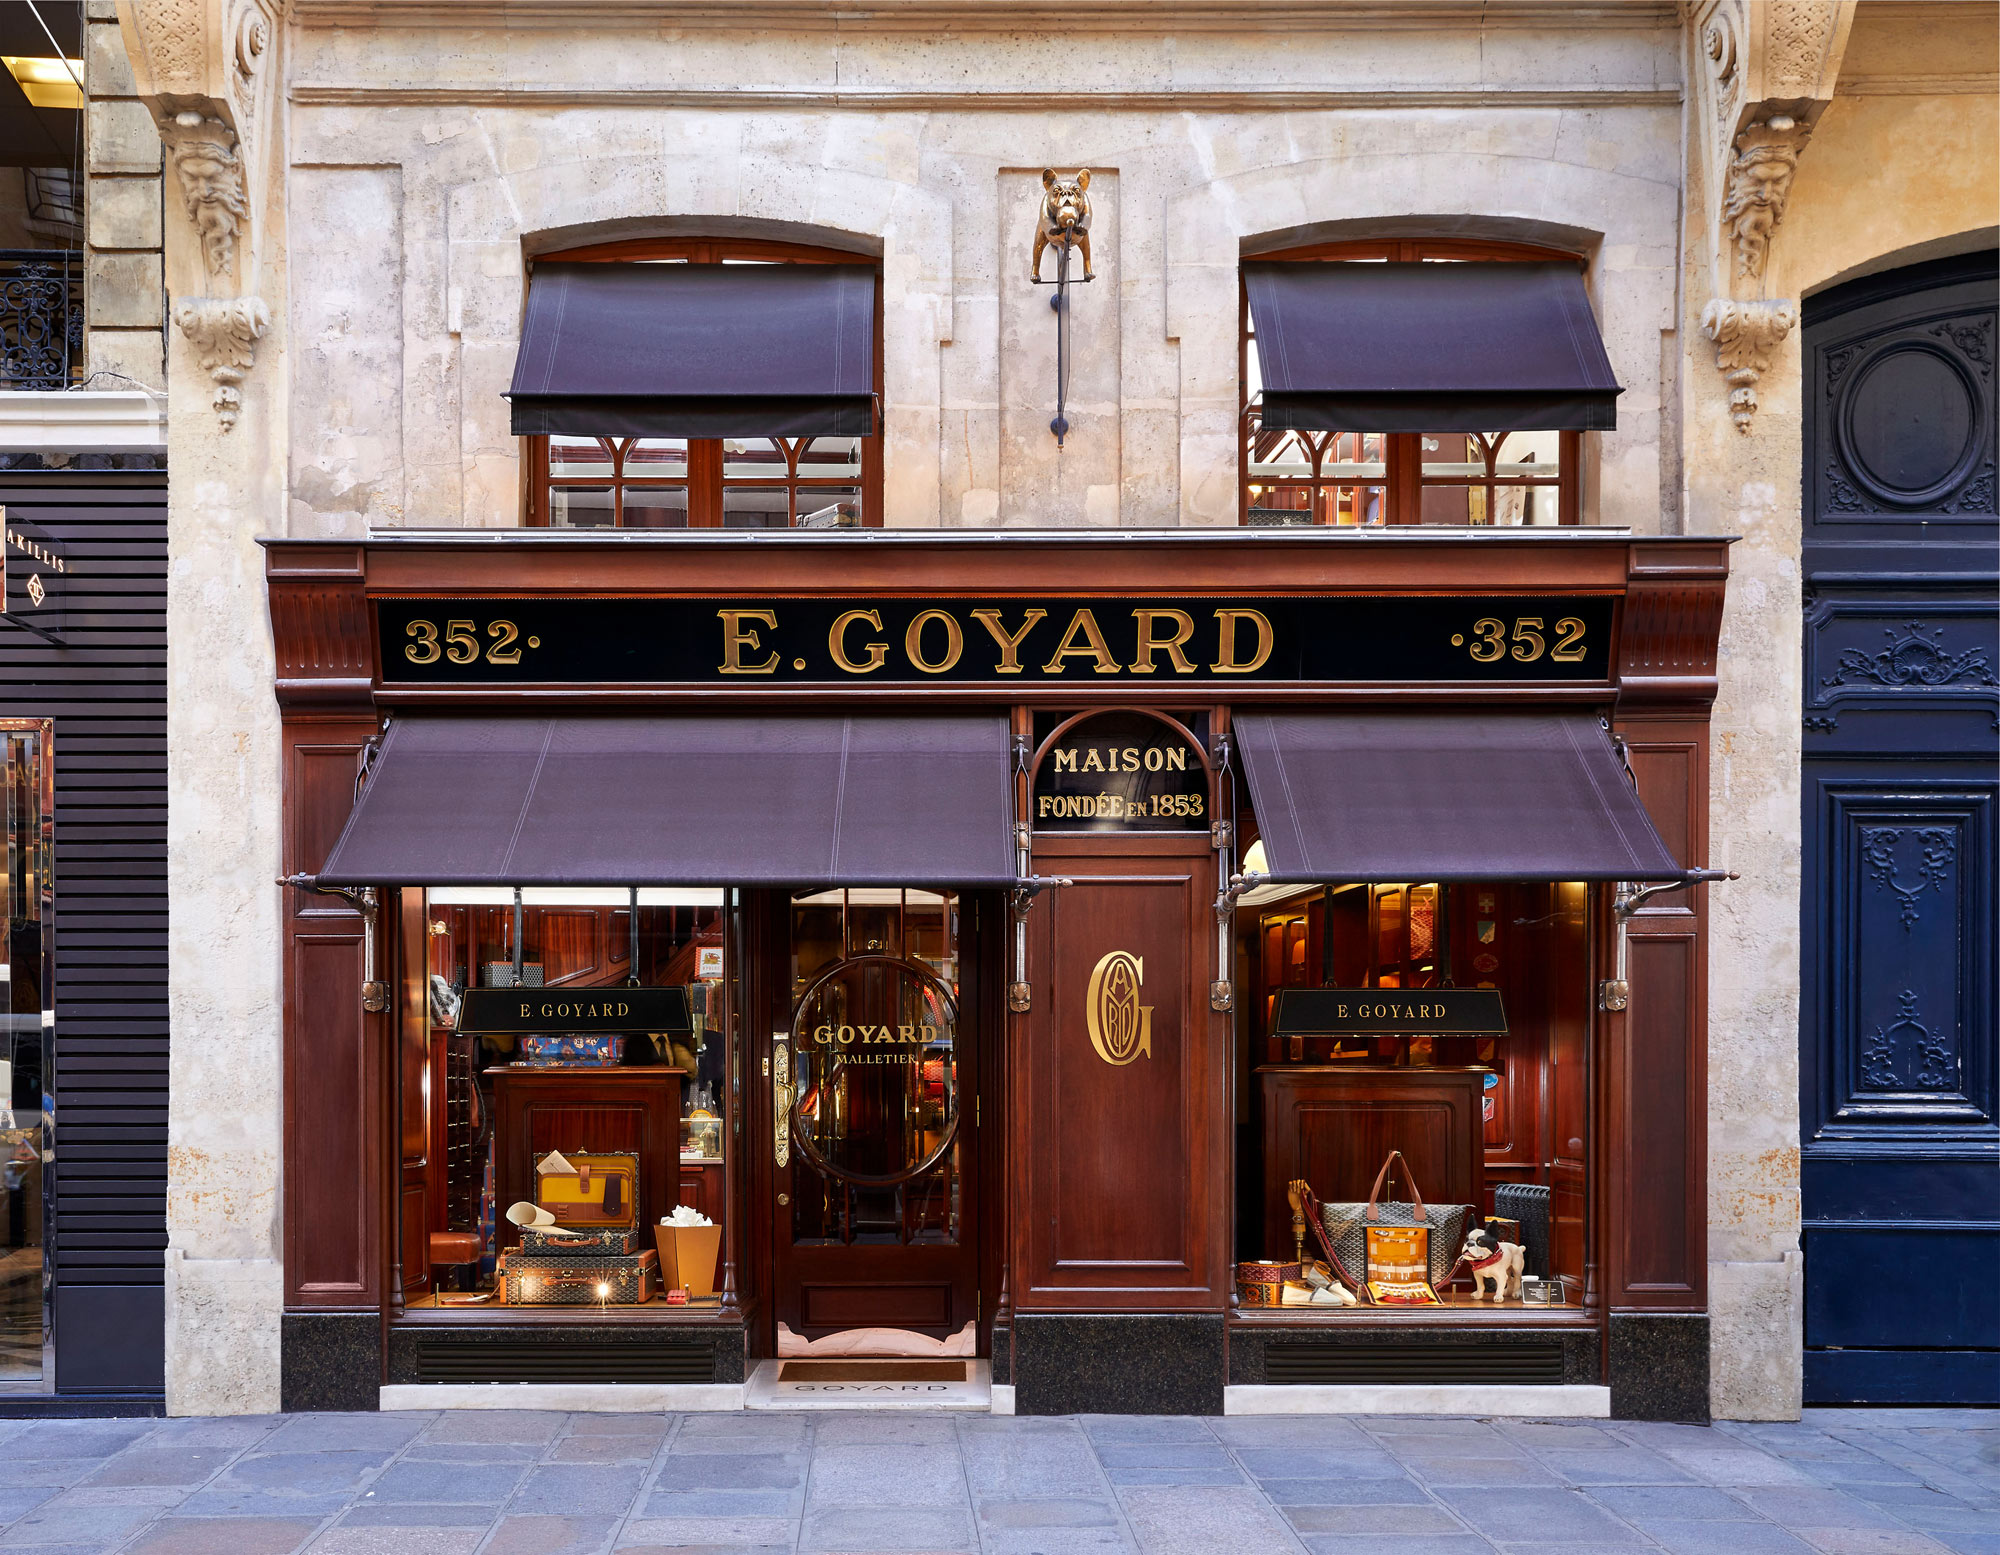 Goyard - Fashion Accessories Store in Paris